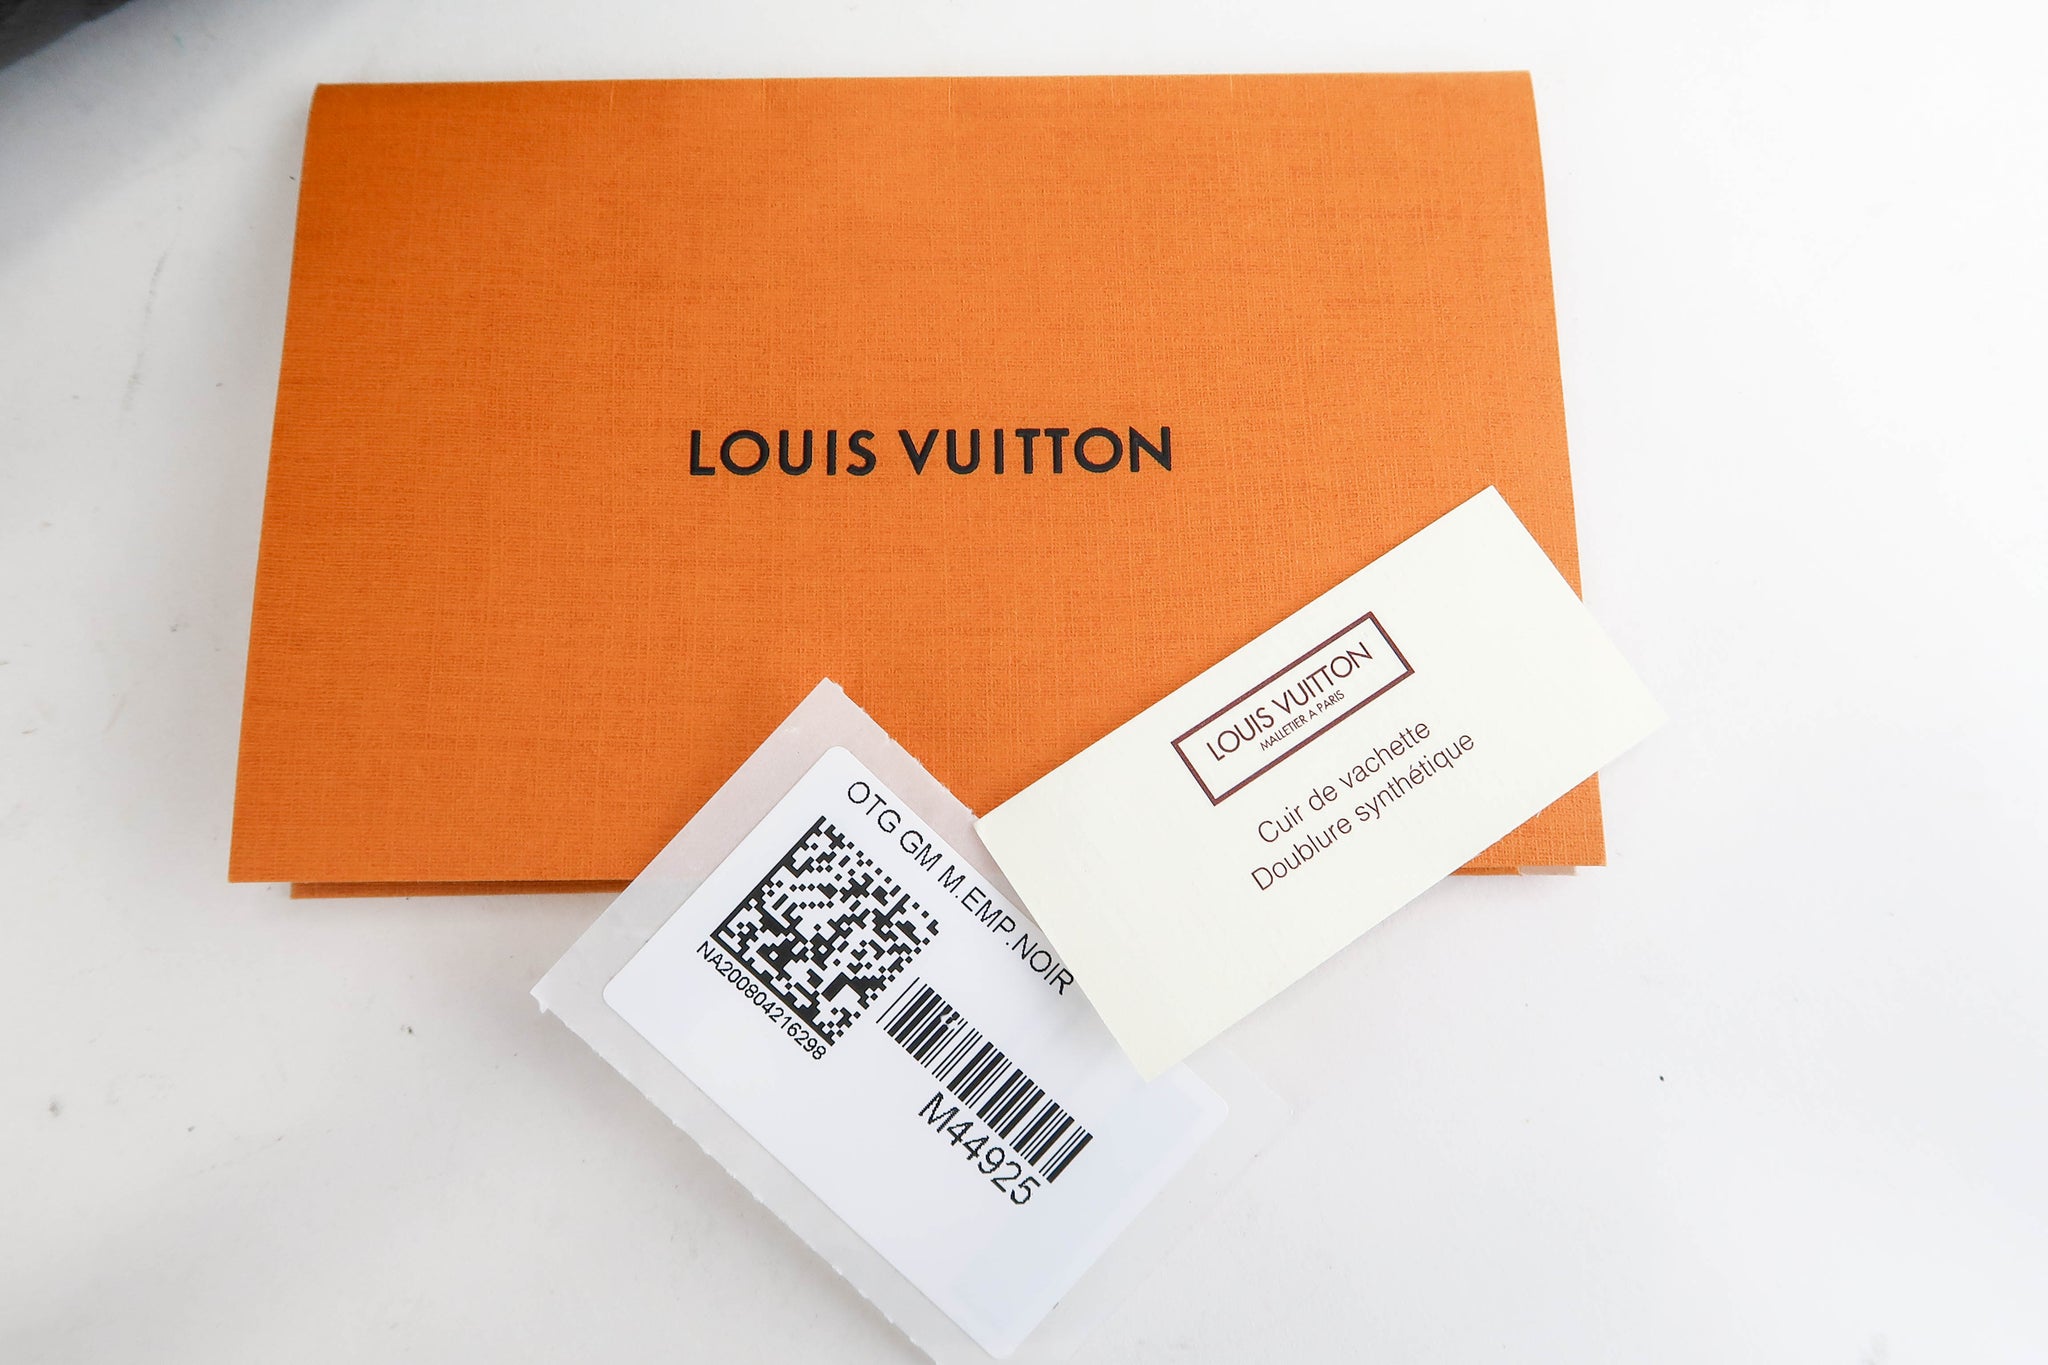 Louis Vuitton Onthego gm (M44925)